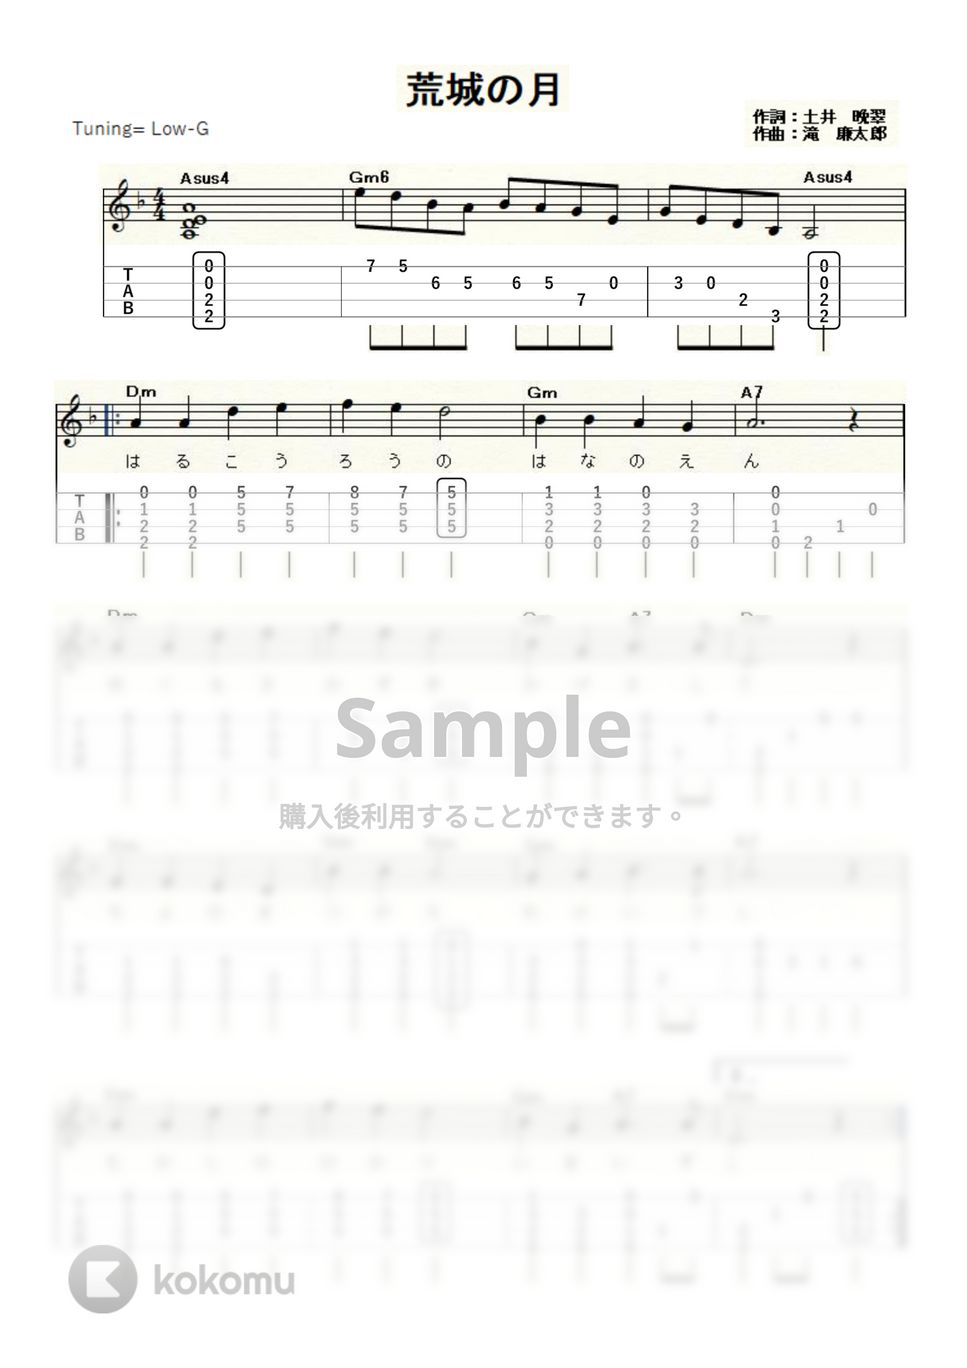 荒城の月 (ｳｸﾚﾚｿﾛ / Low-G / 中級) by ukulelepapa